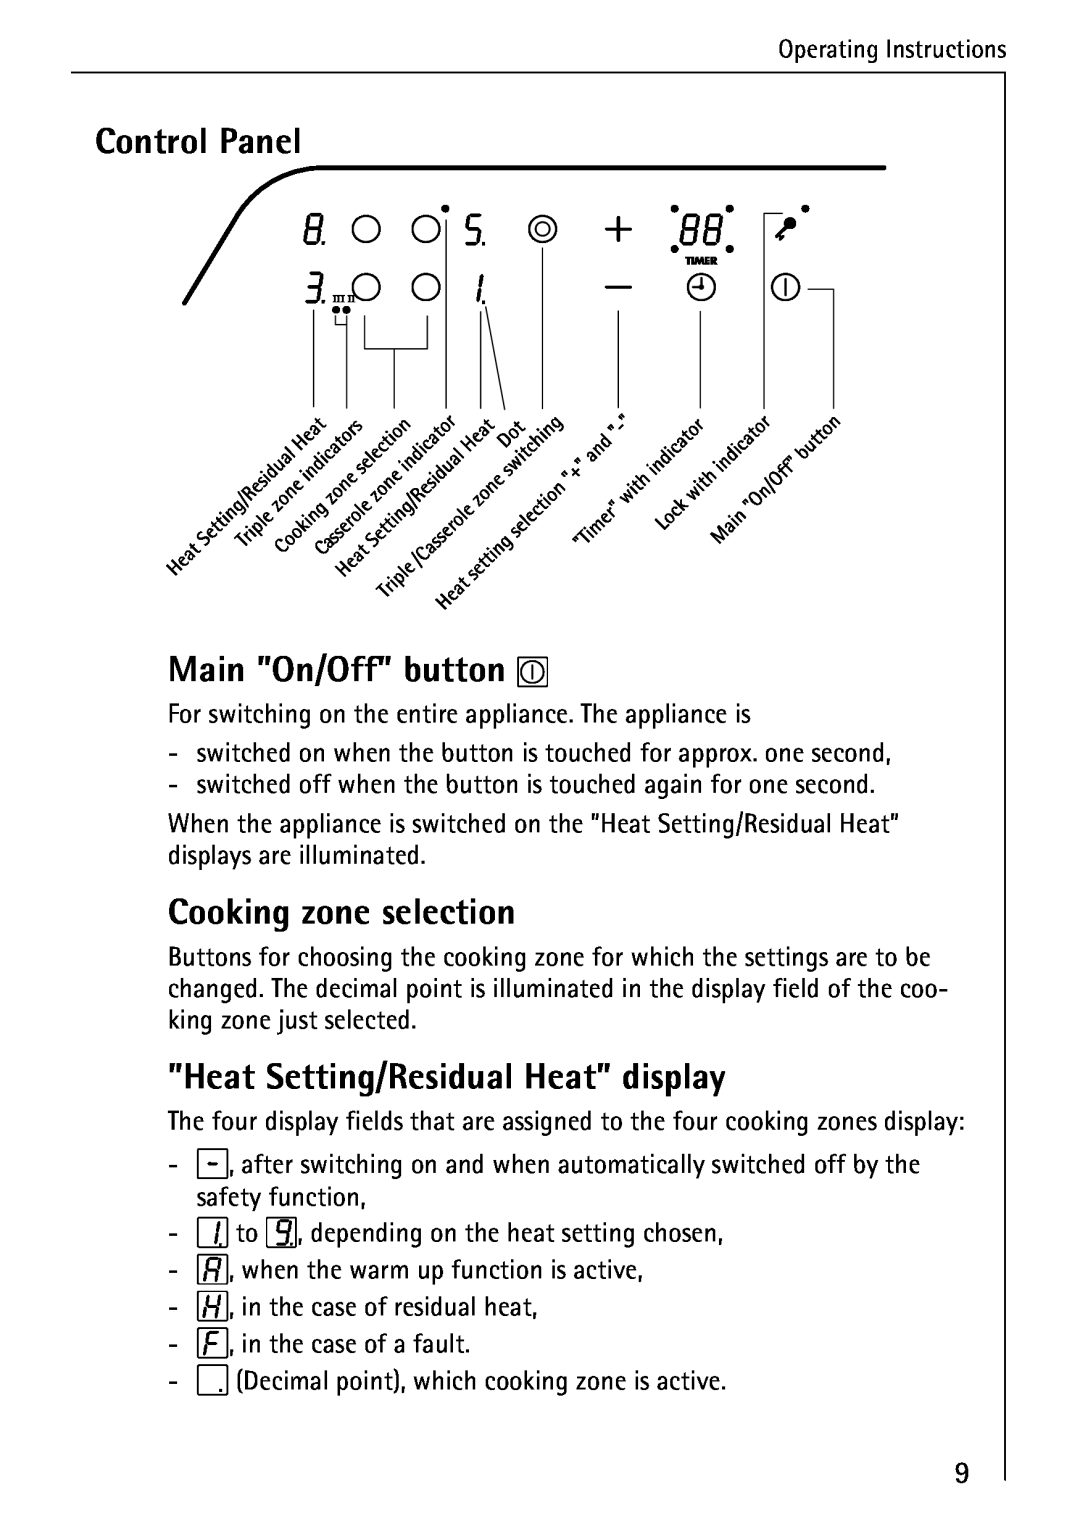 AEG 95300KA-MN Control Panel, Main On/Off button, Cooking zone selection, Heat Setting/Residual Heat display 